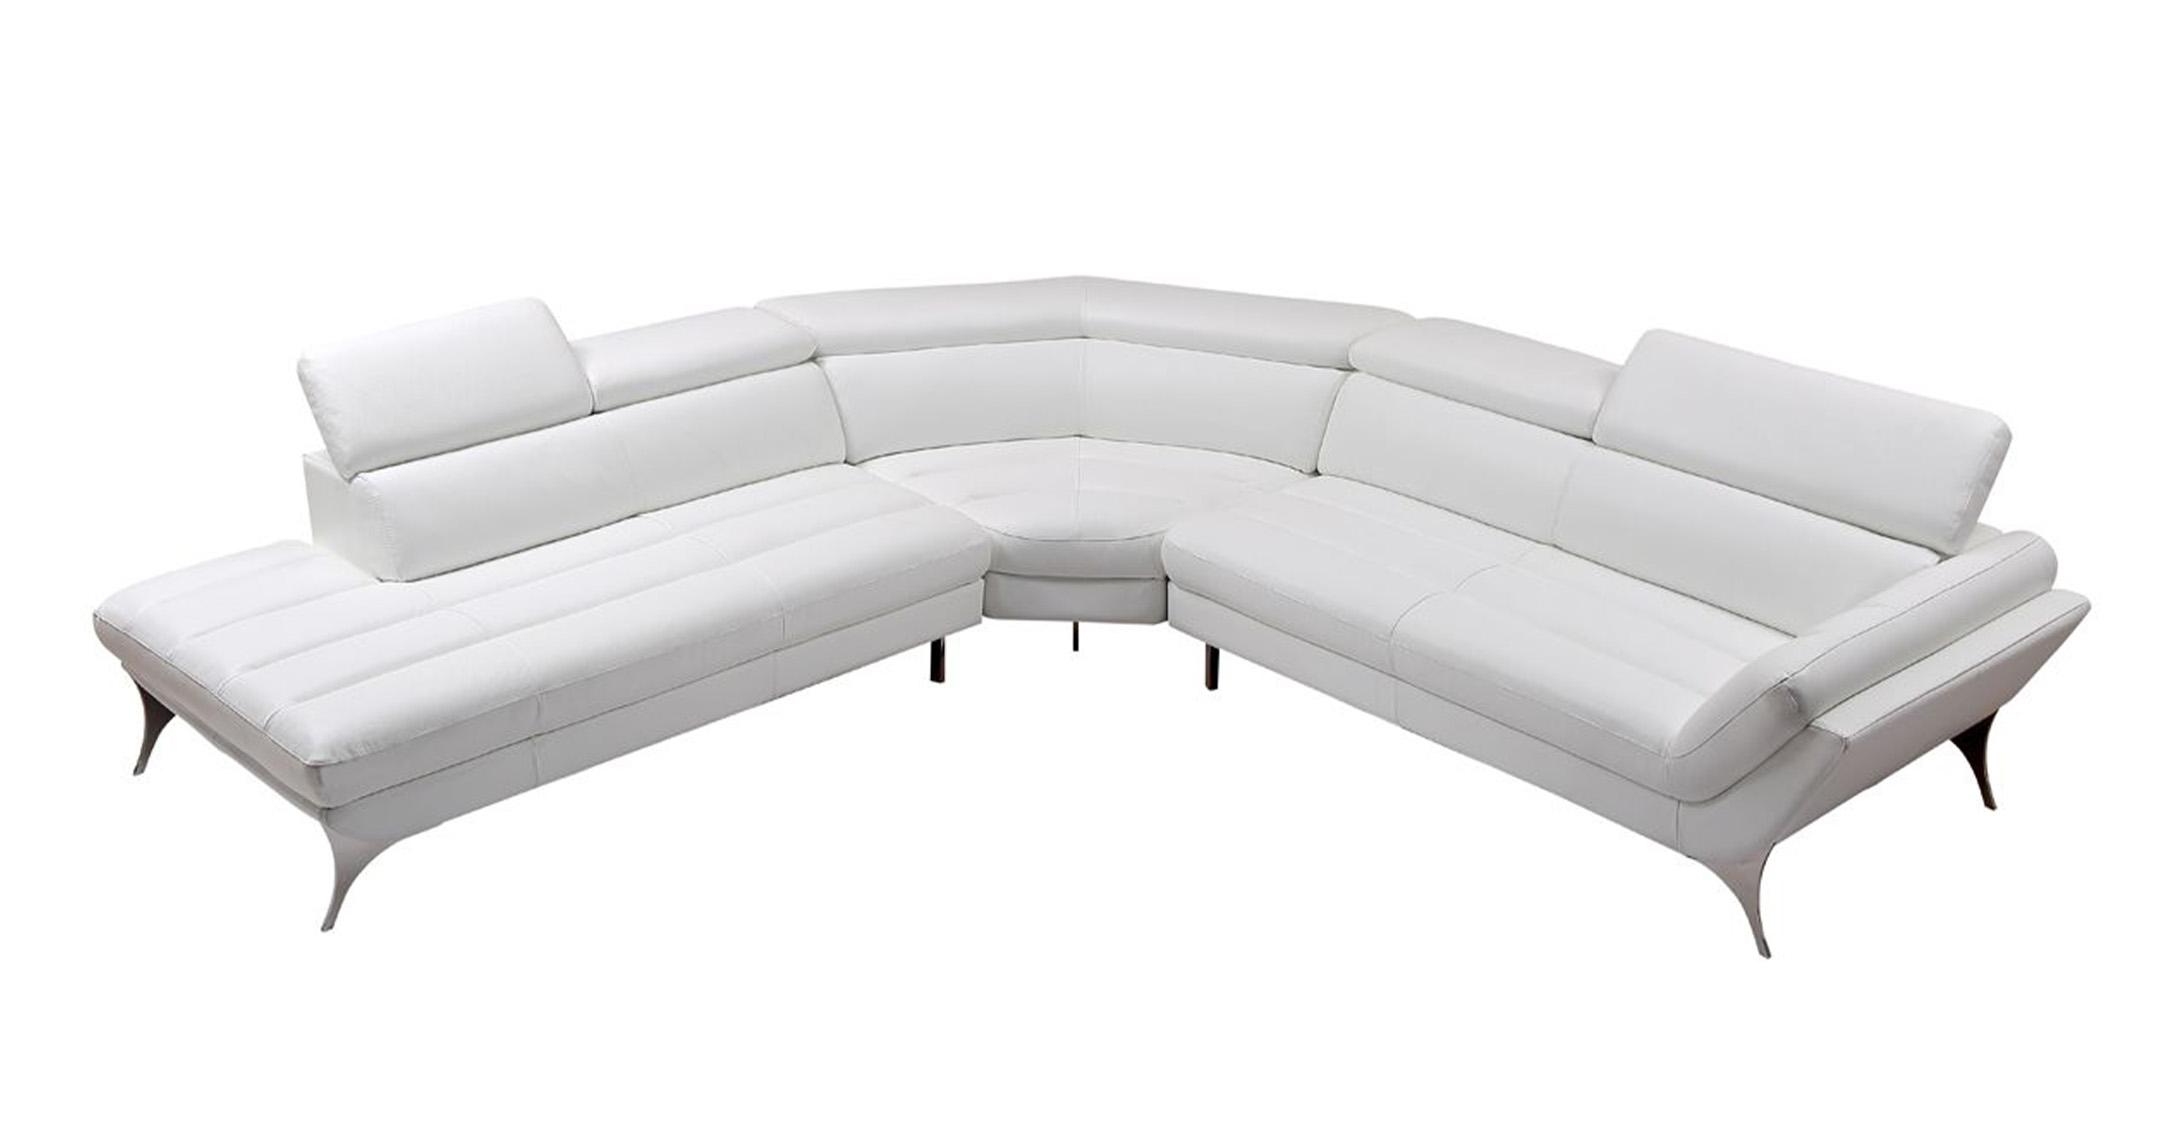 Contemporary, Modern Sectional Sofa VGCA1541-WHT VGCA1541-WHT in White Italian Leather